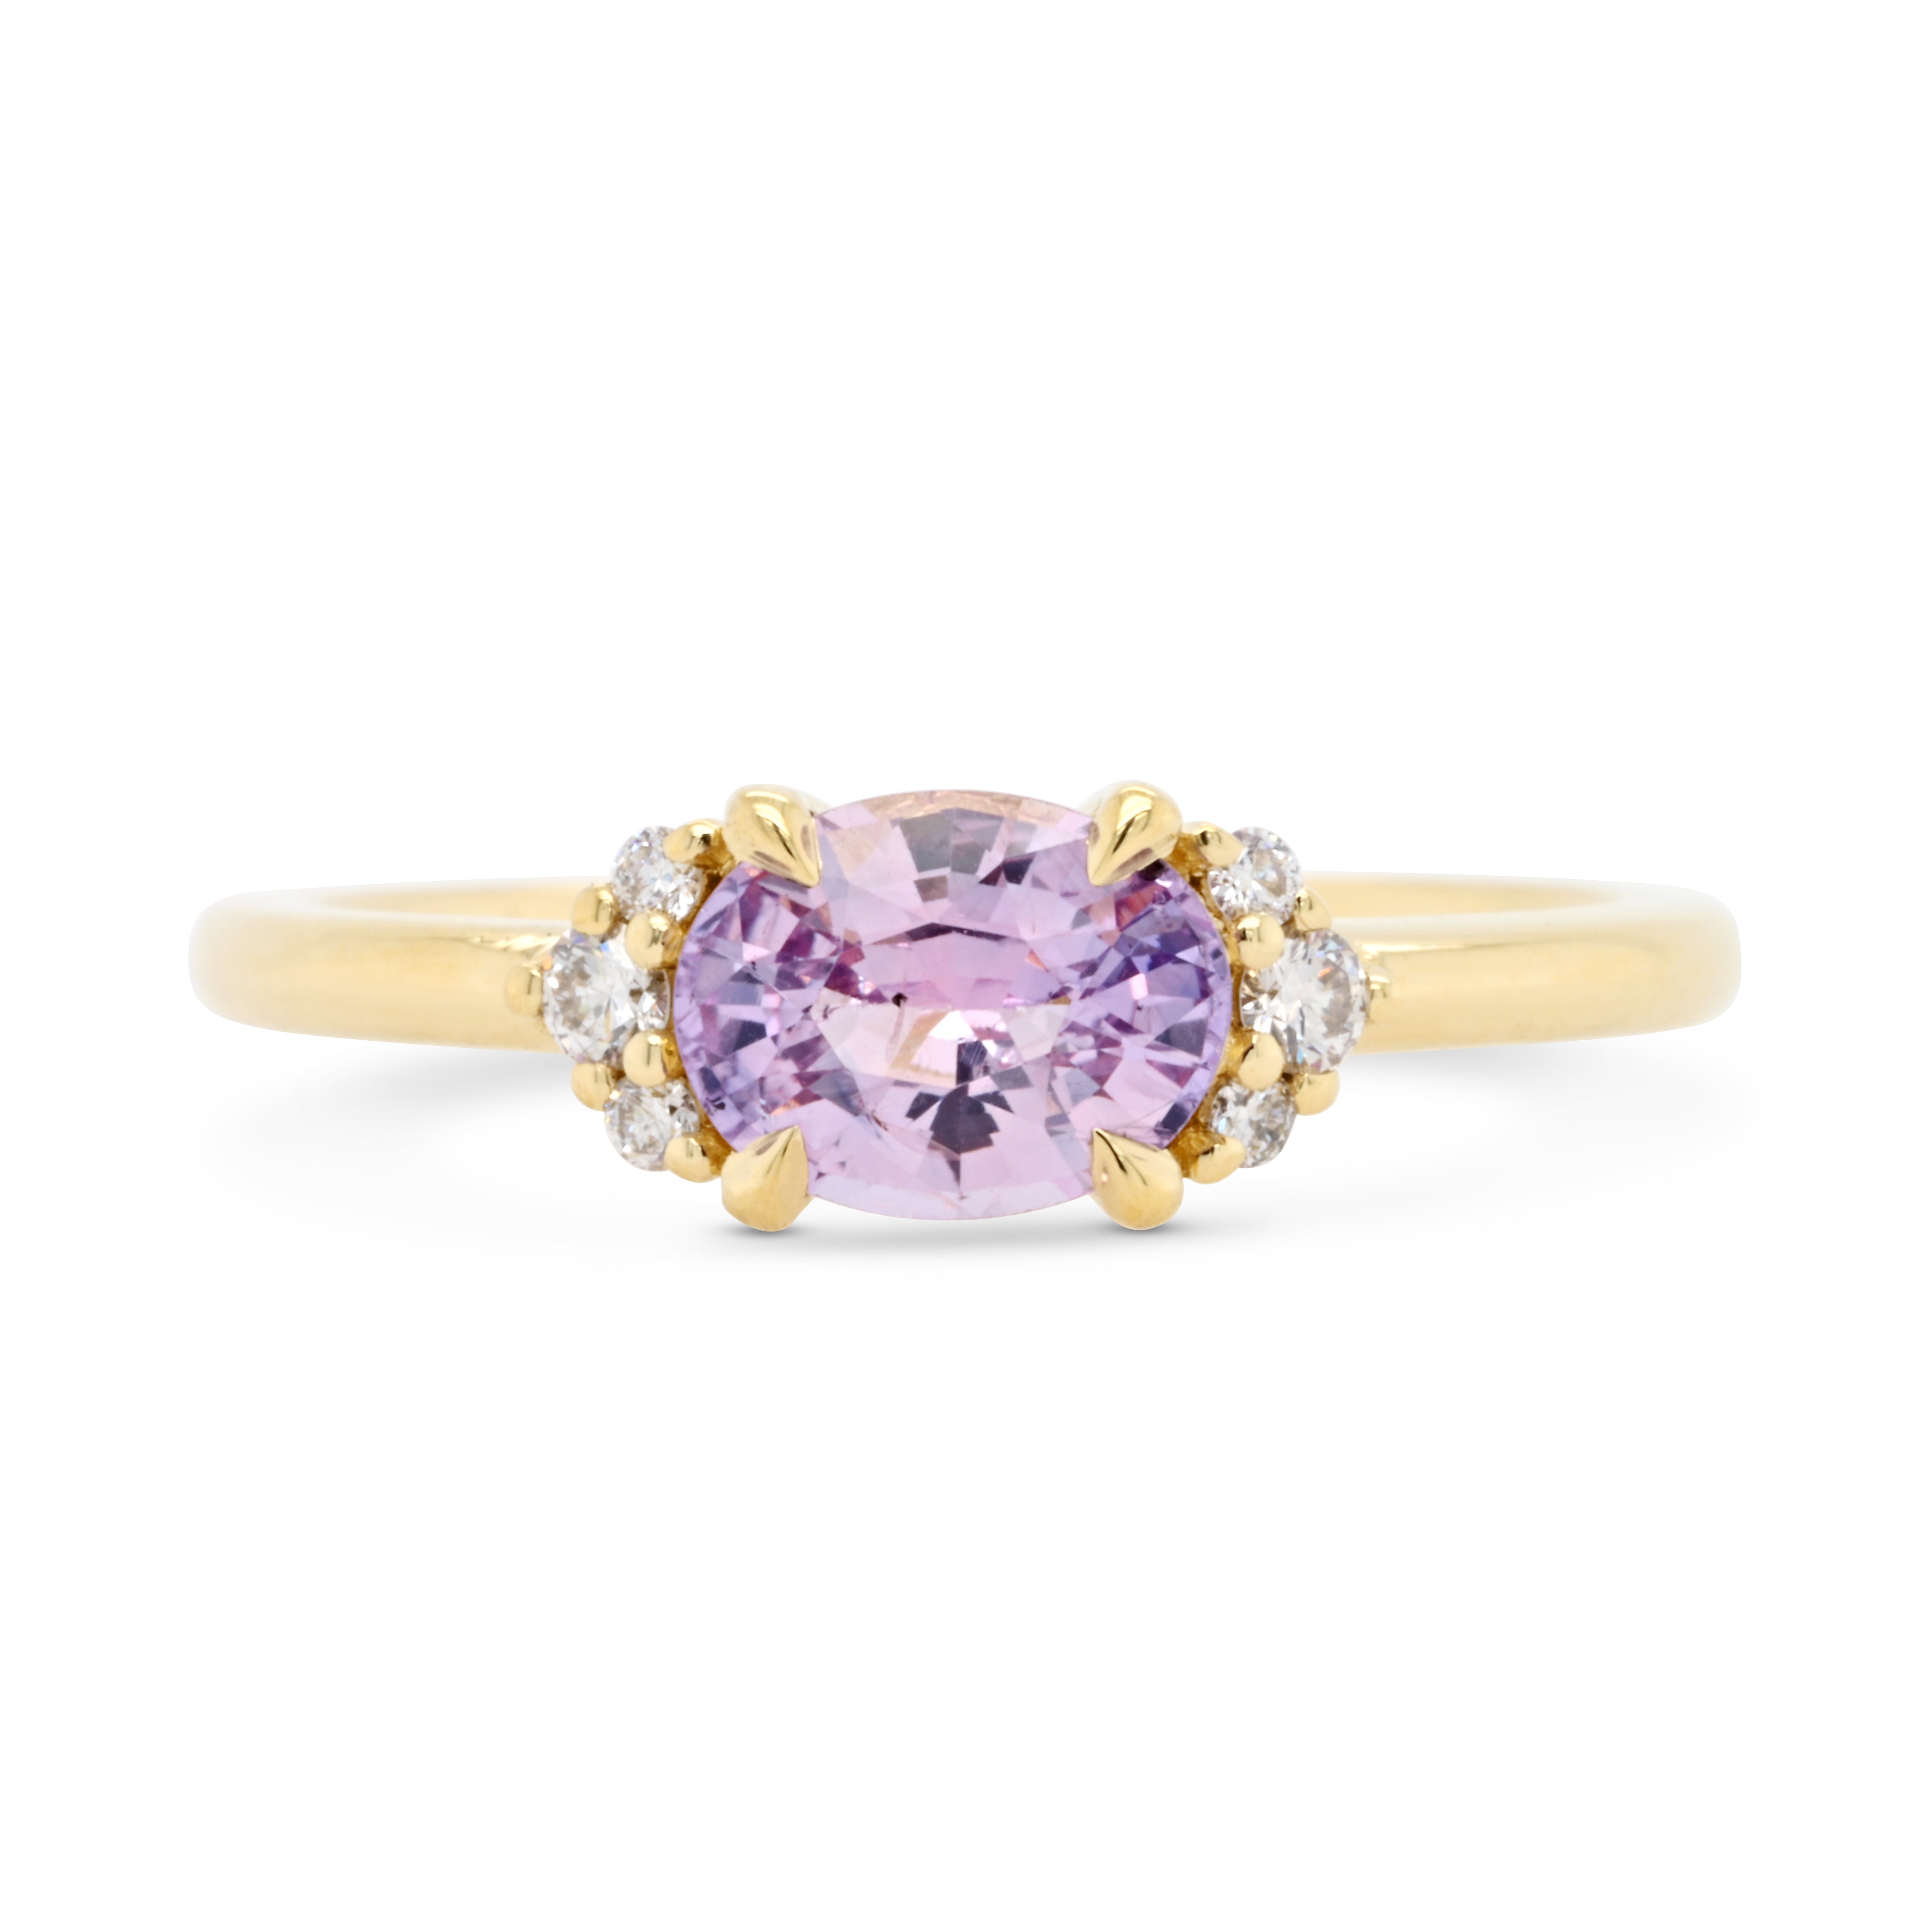  Purple sapphire and diamond engagement ring